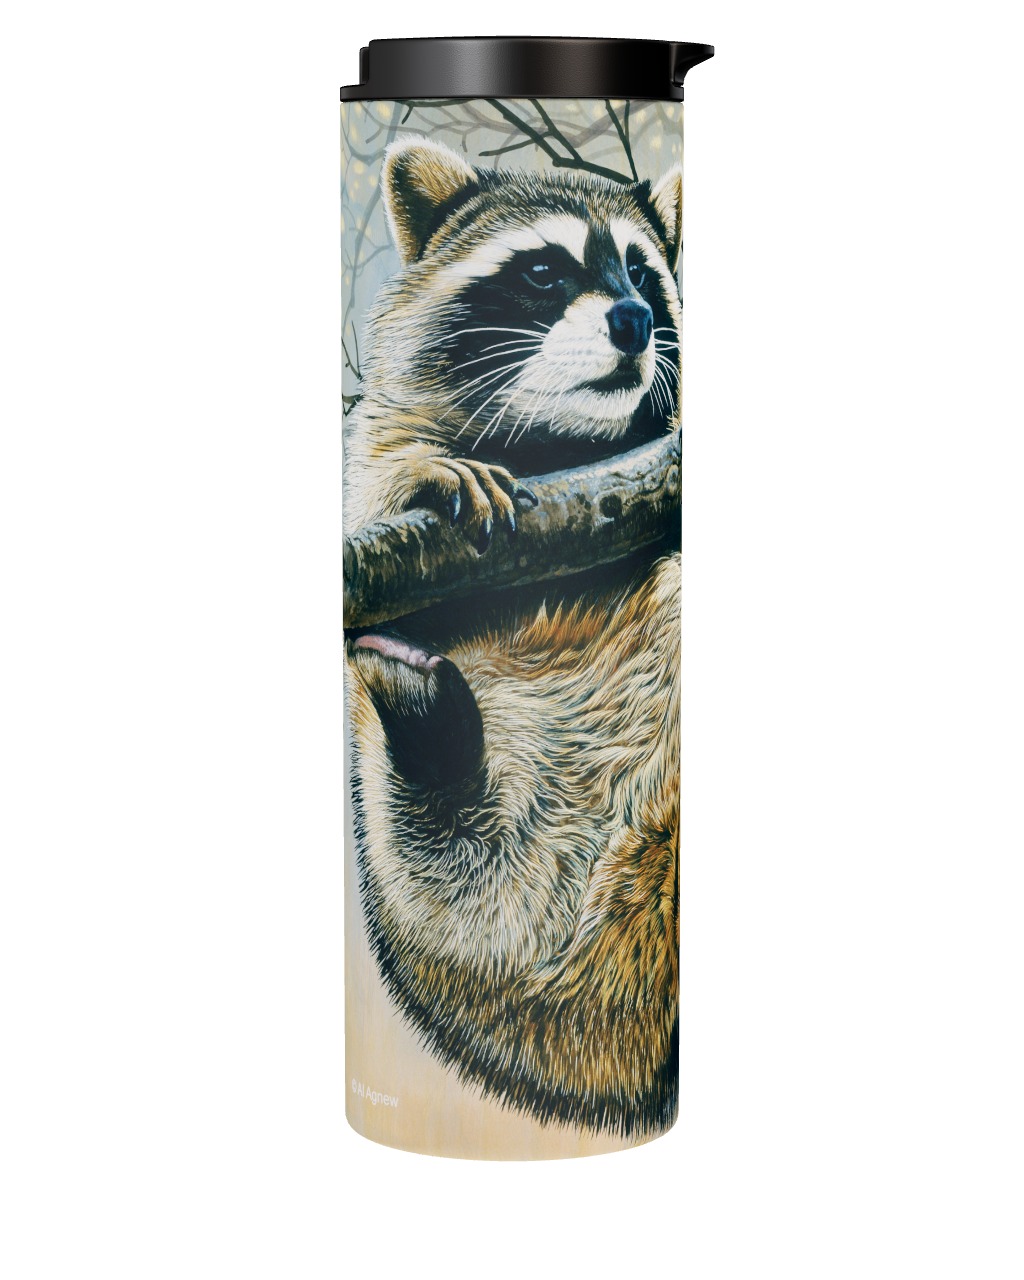 Haning In There - Raccoon Tumbler